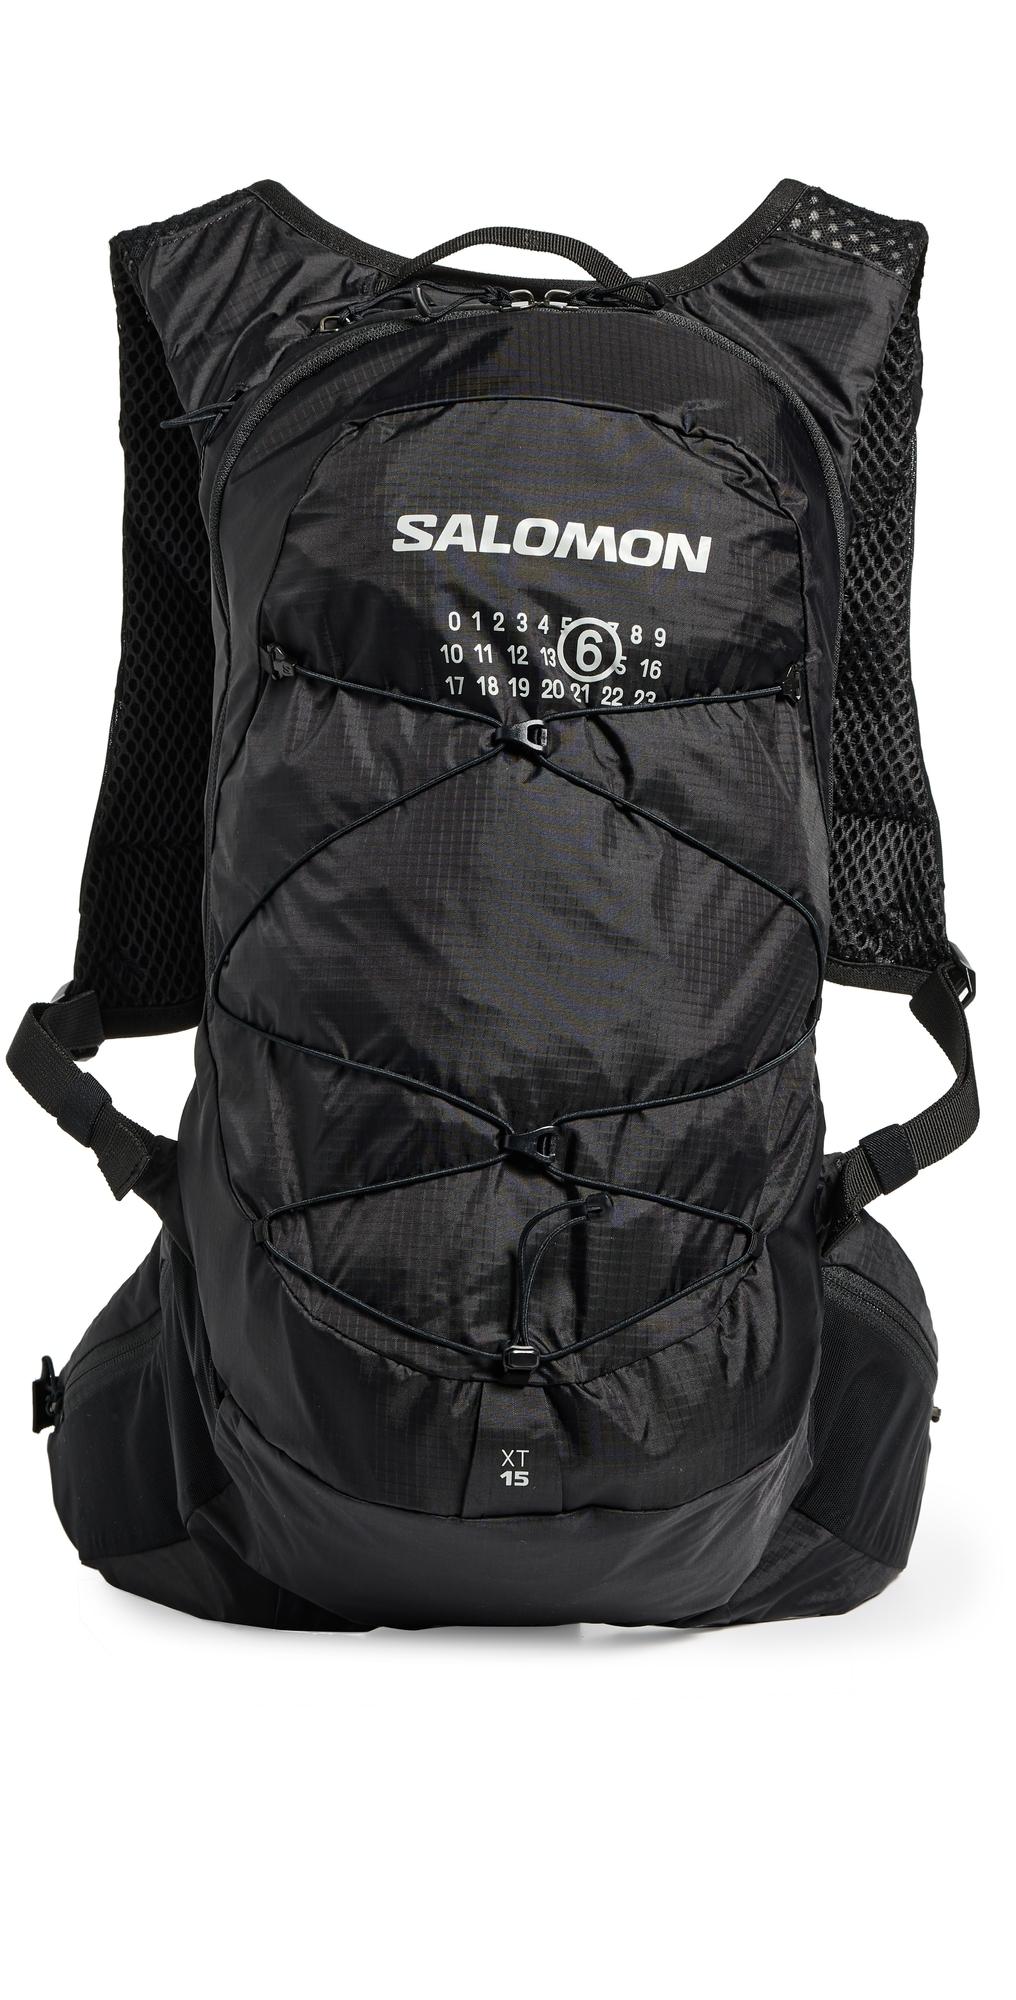 MM6 by Maison Martin Margiela Xt 15 X Salomon Backpack in Black